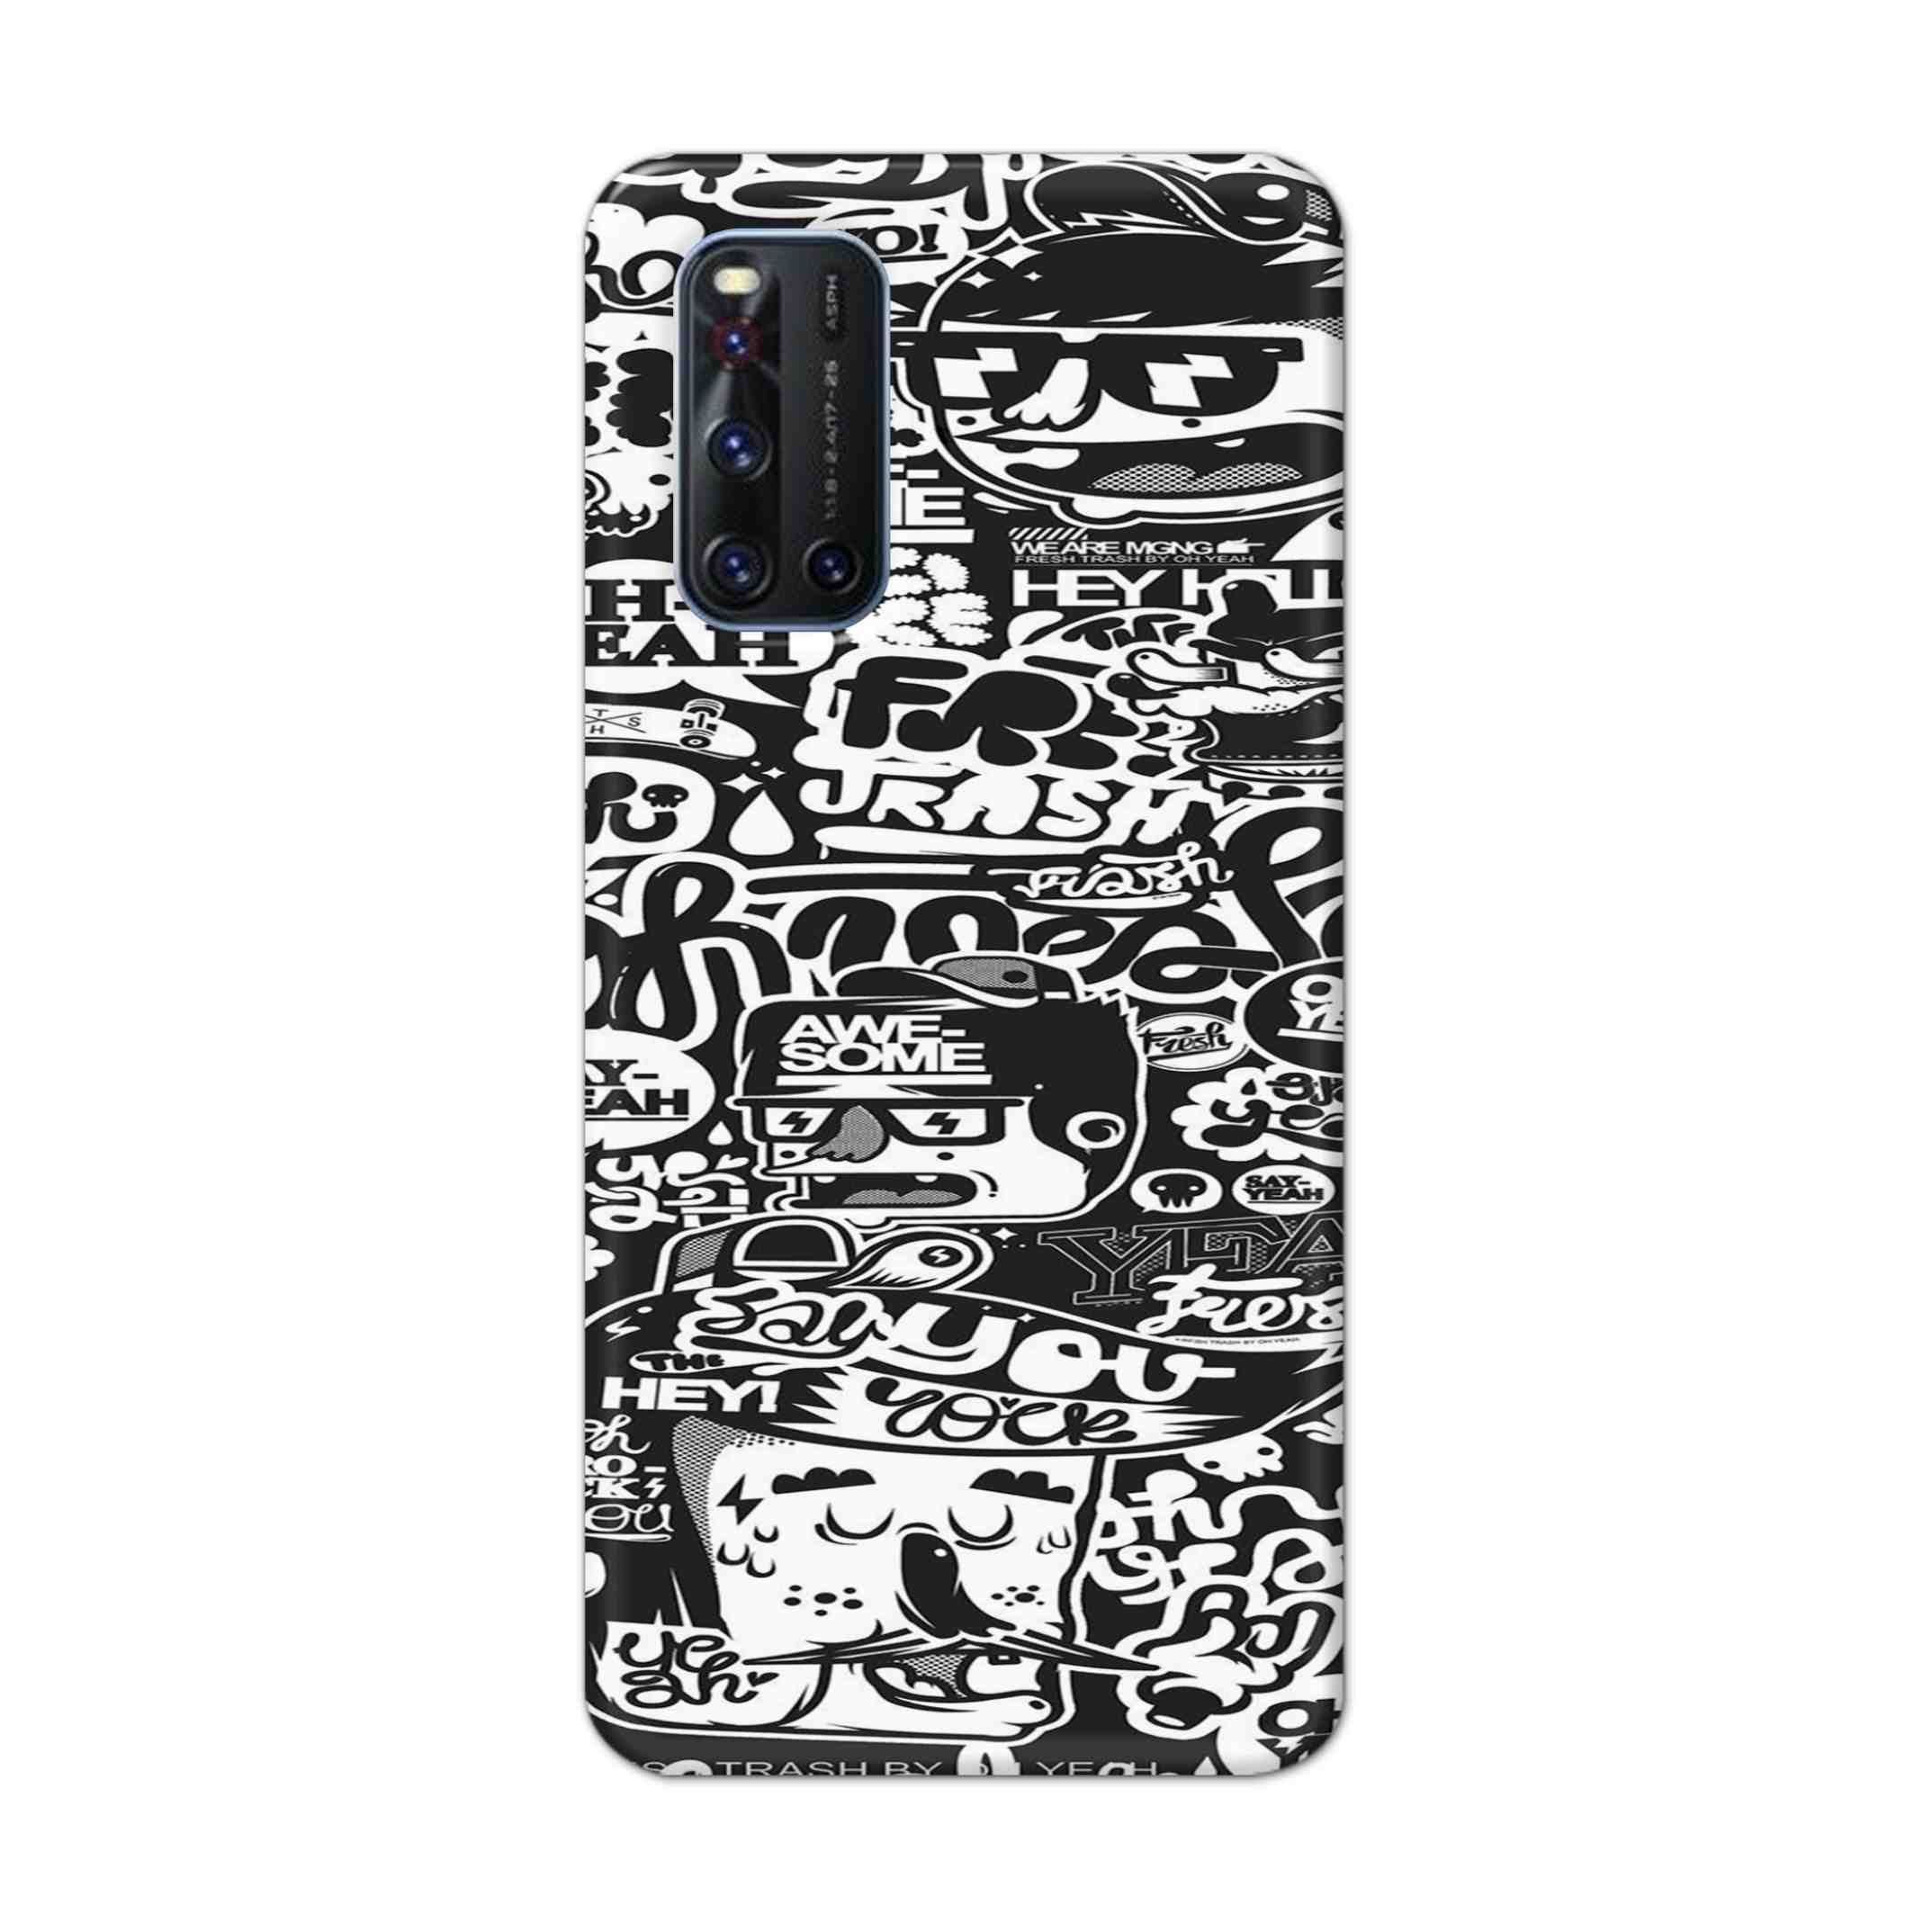 Buy Awesome Hard Back Mobile Phone Case Cover For VivoV19 Online